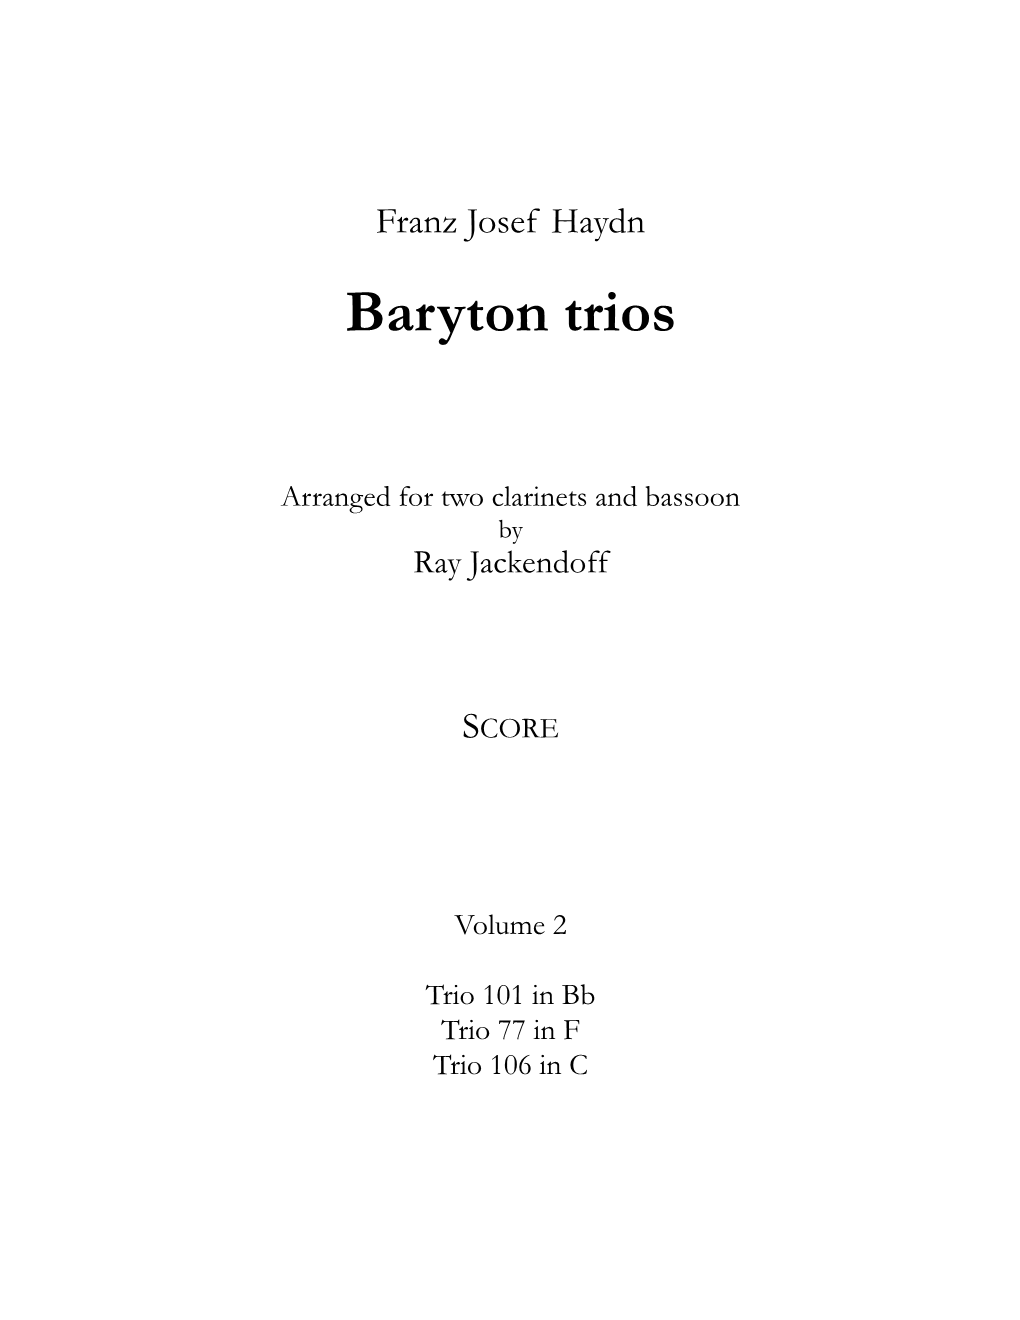 Baryton Trios, Vol. 2